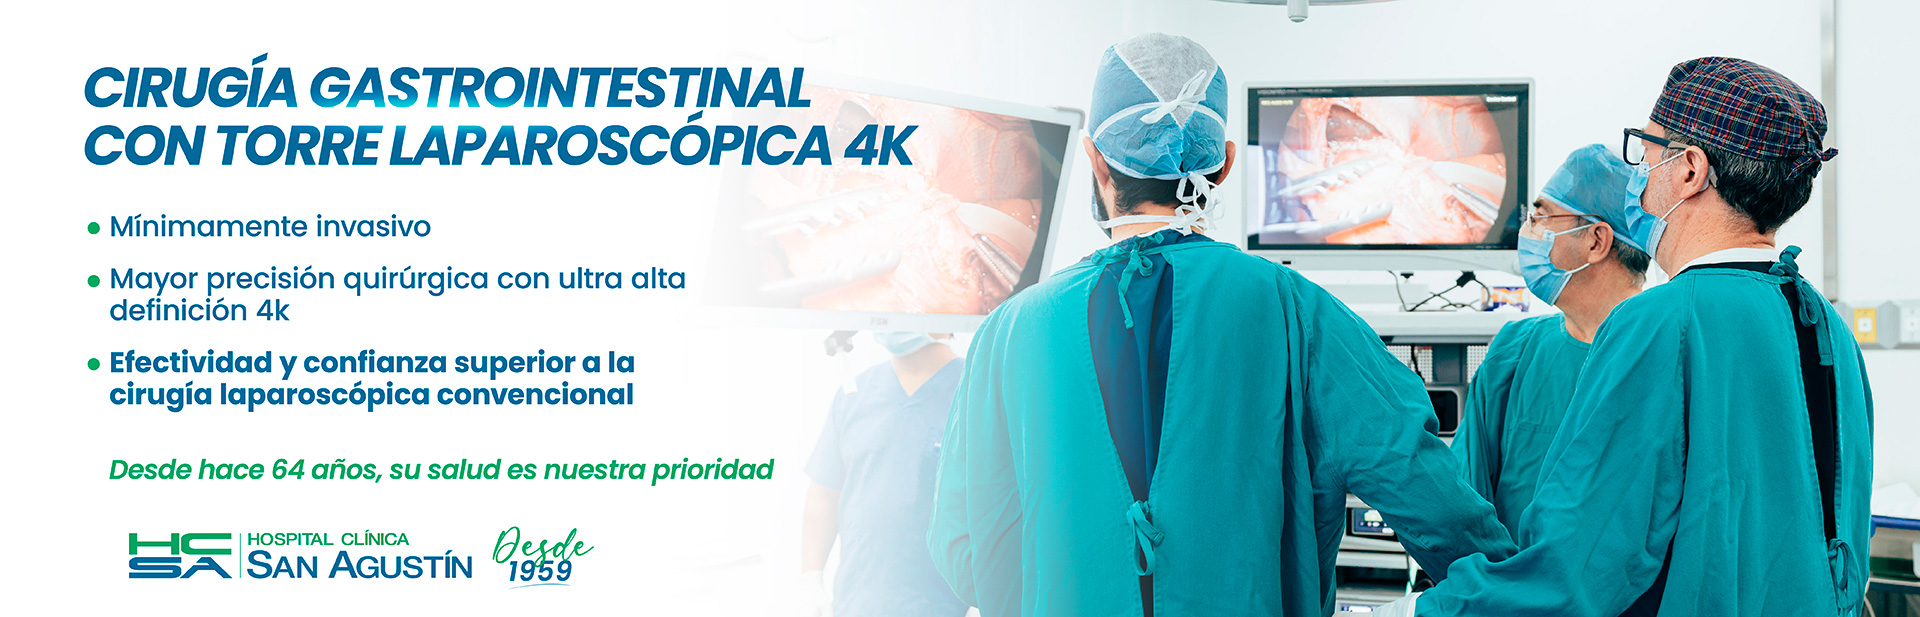 Cirugía Gastrointestinal con torre laparoscópica 4k | Hospital Clínica San Agustín